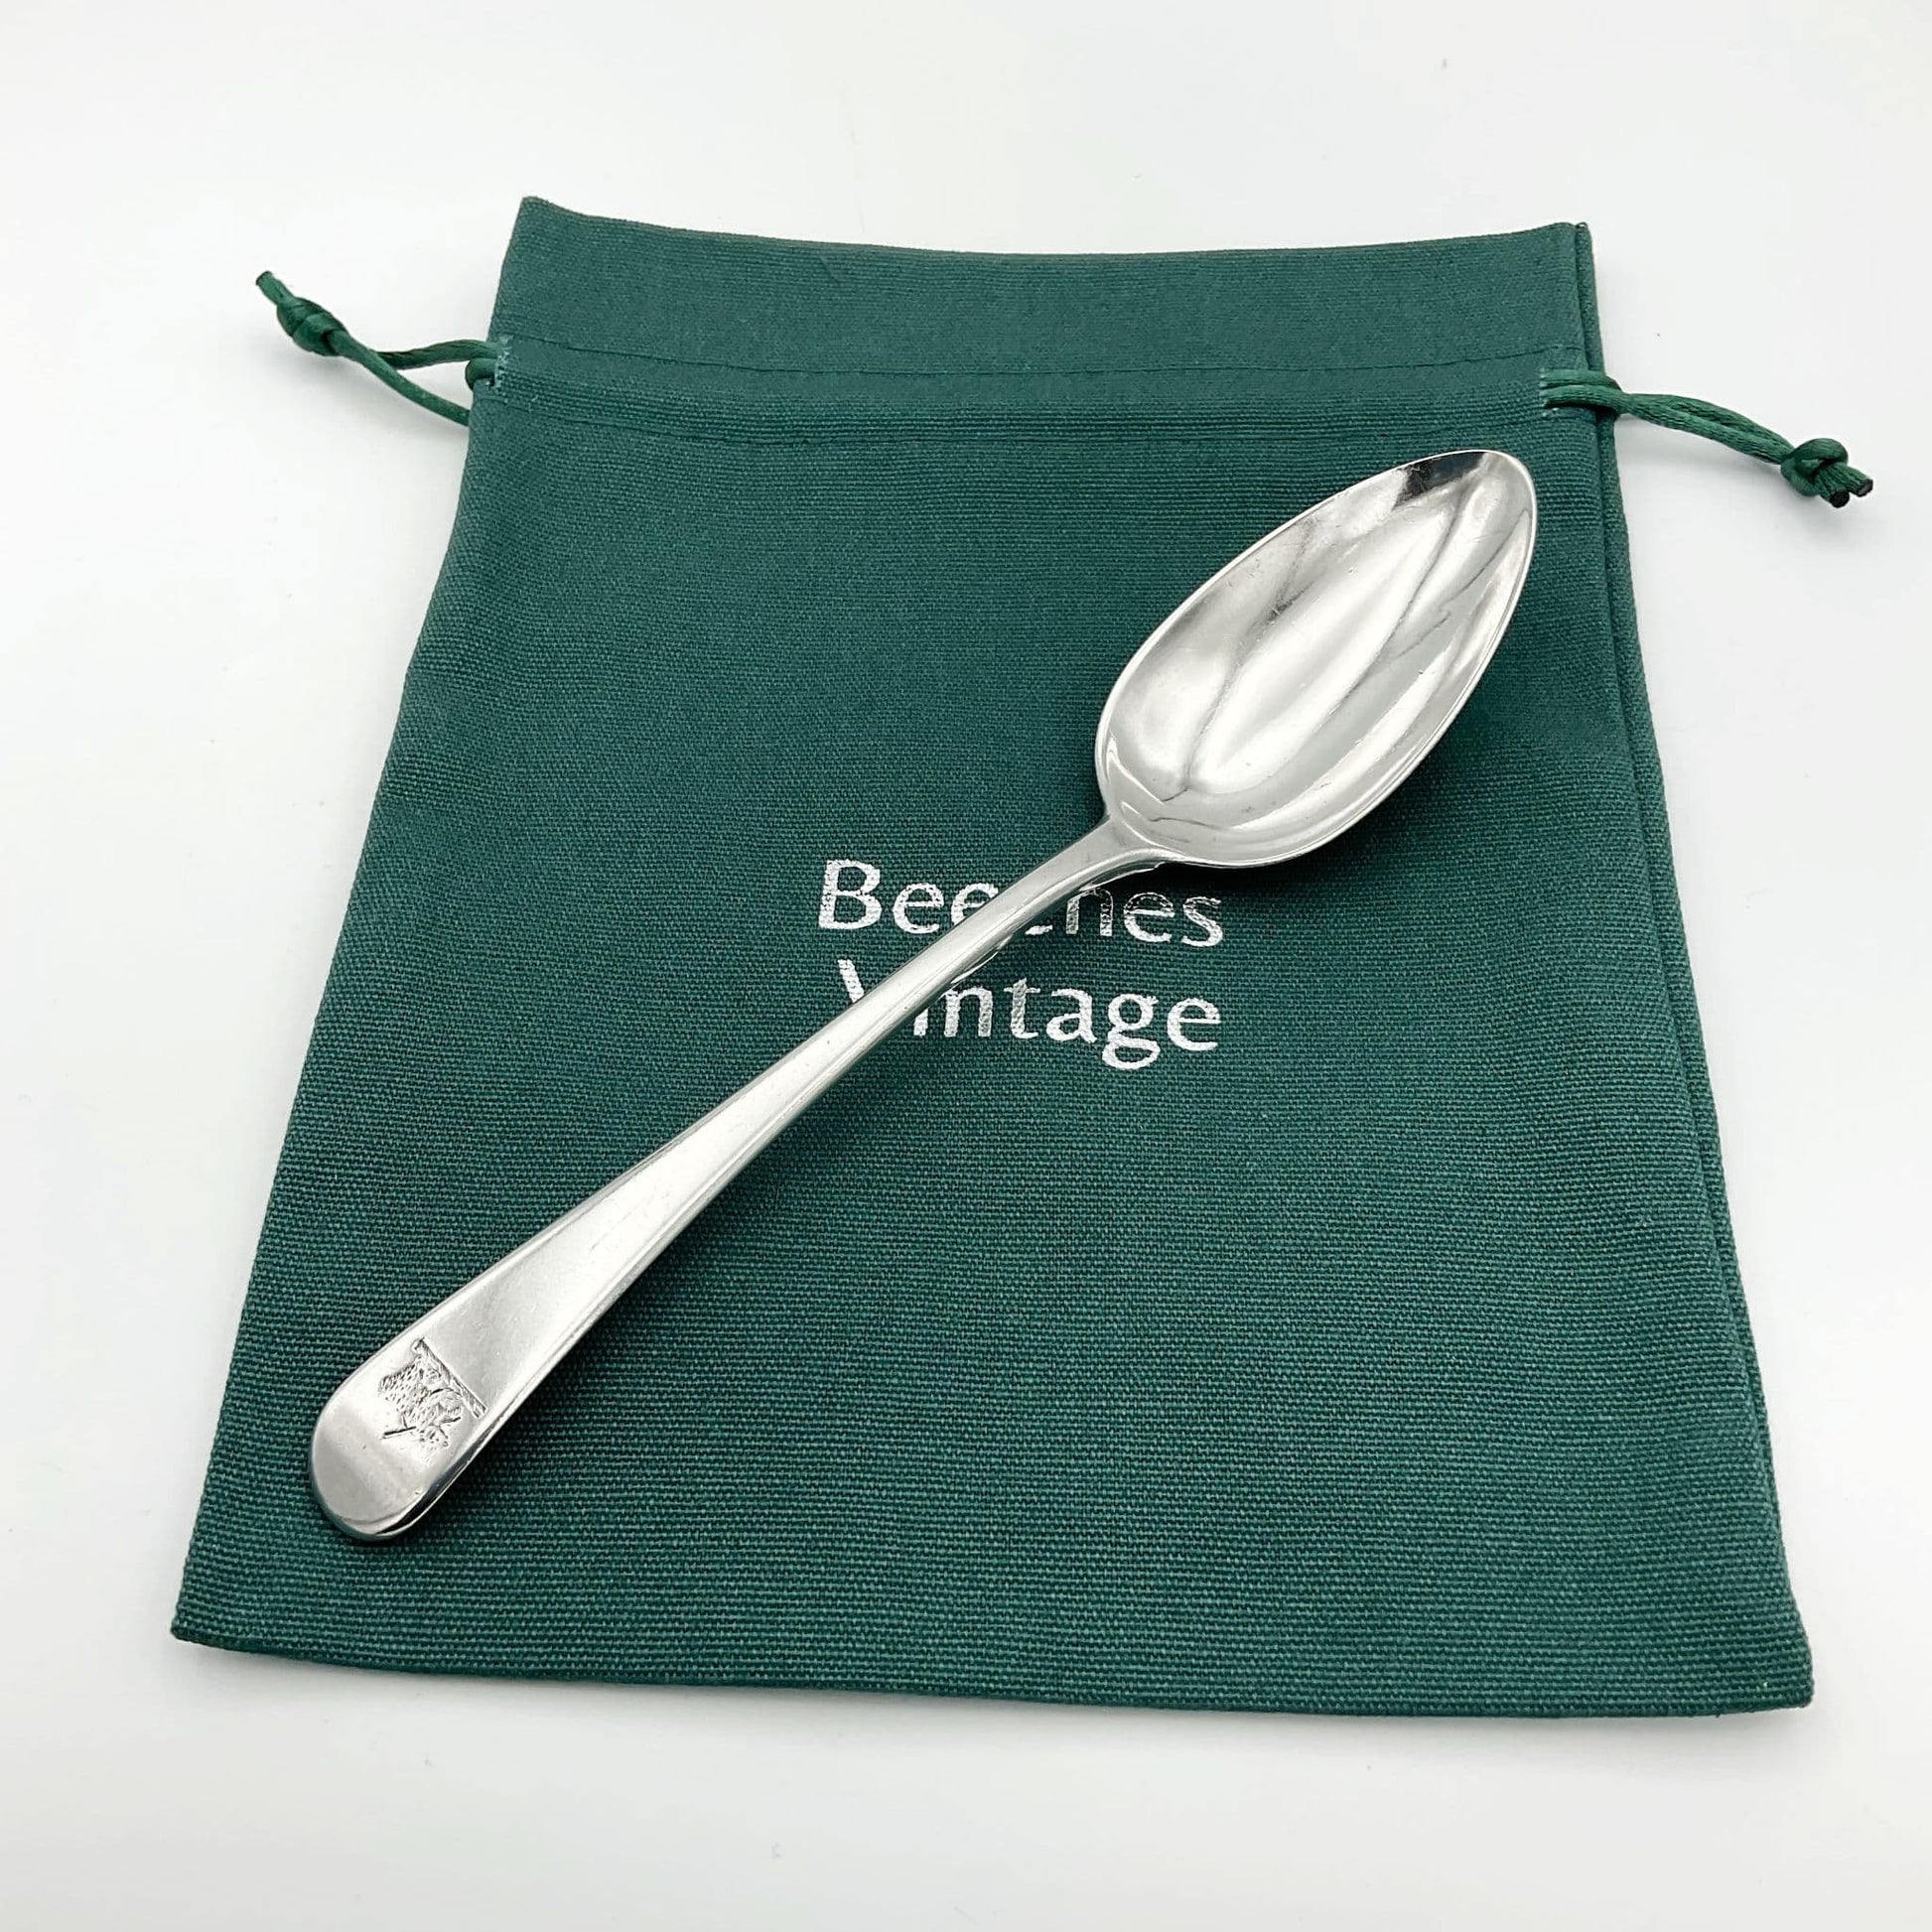 Antique Silver dessert spoon on a green cotton bag